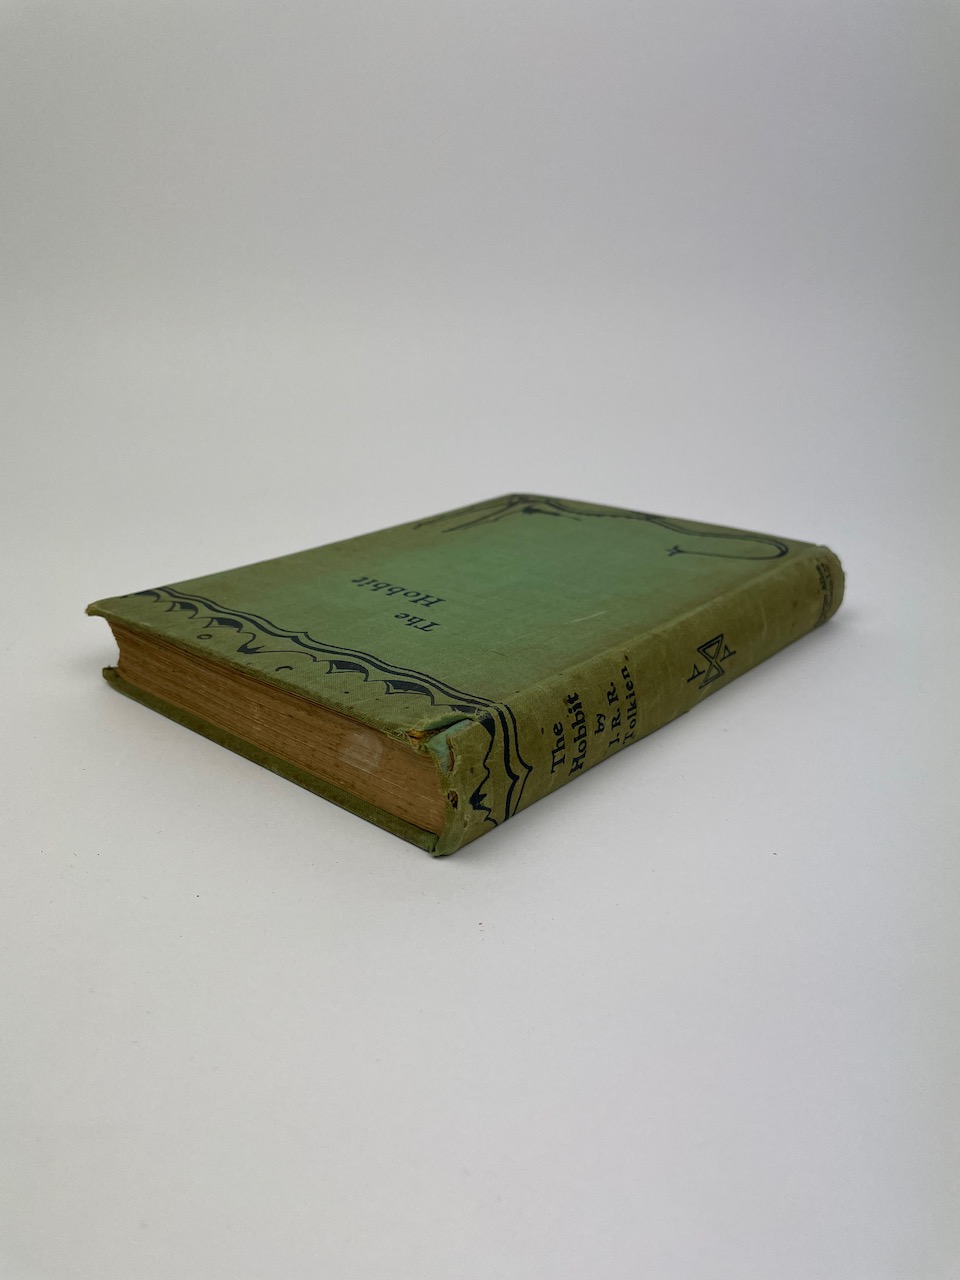 
The Hobbit, George Allen & Unwin, 1937 1st UK Edition 2nd impression 17